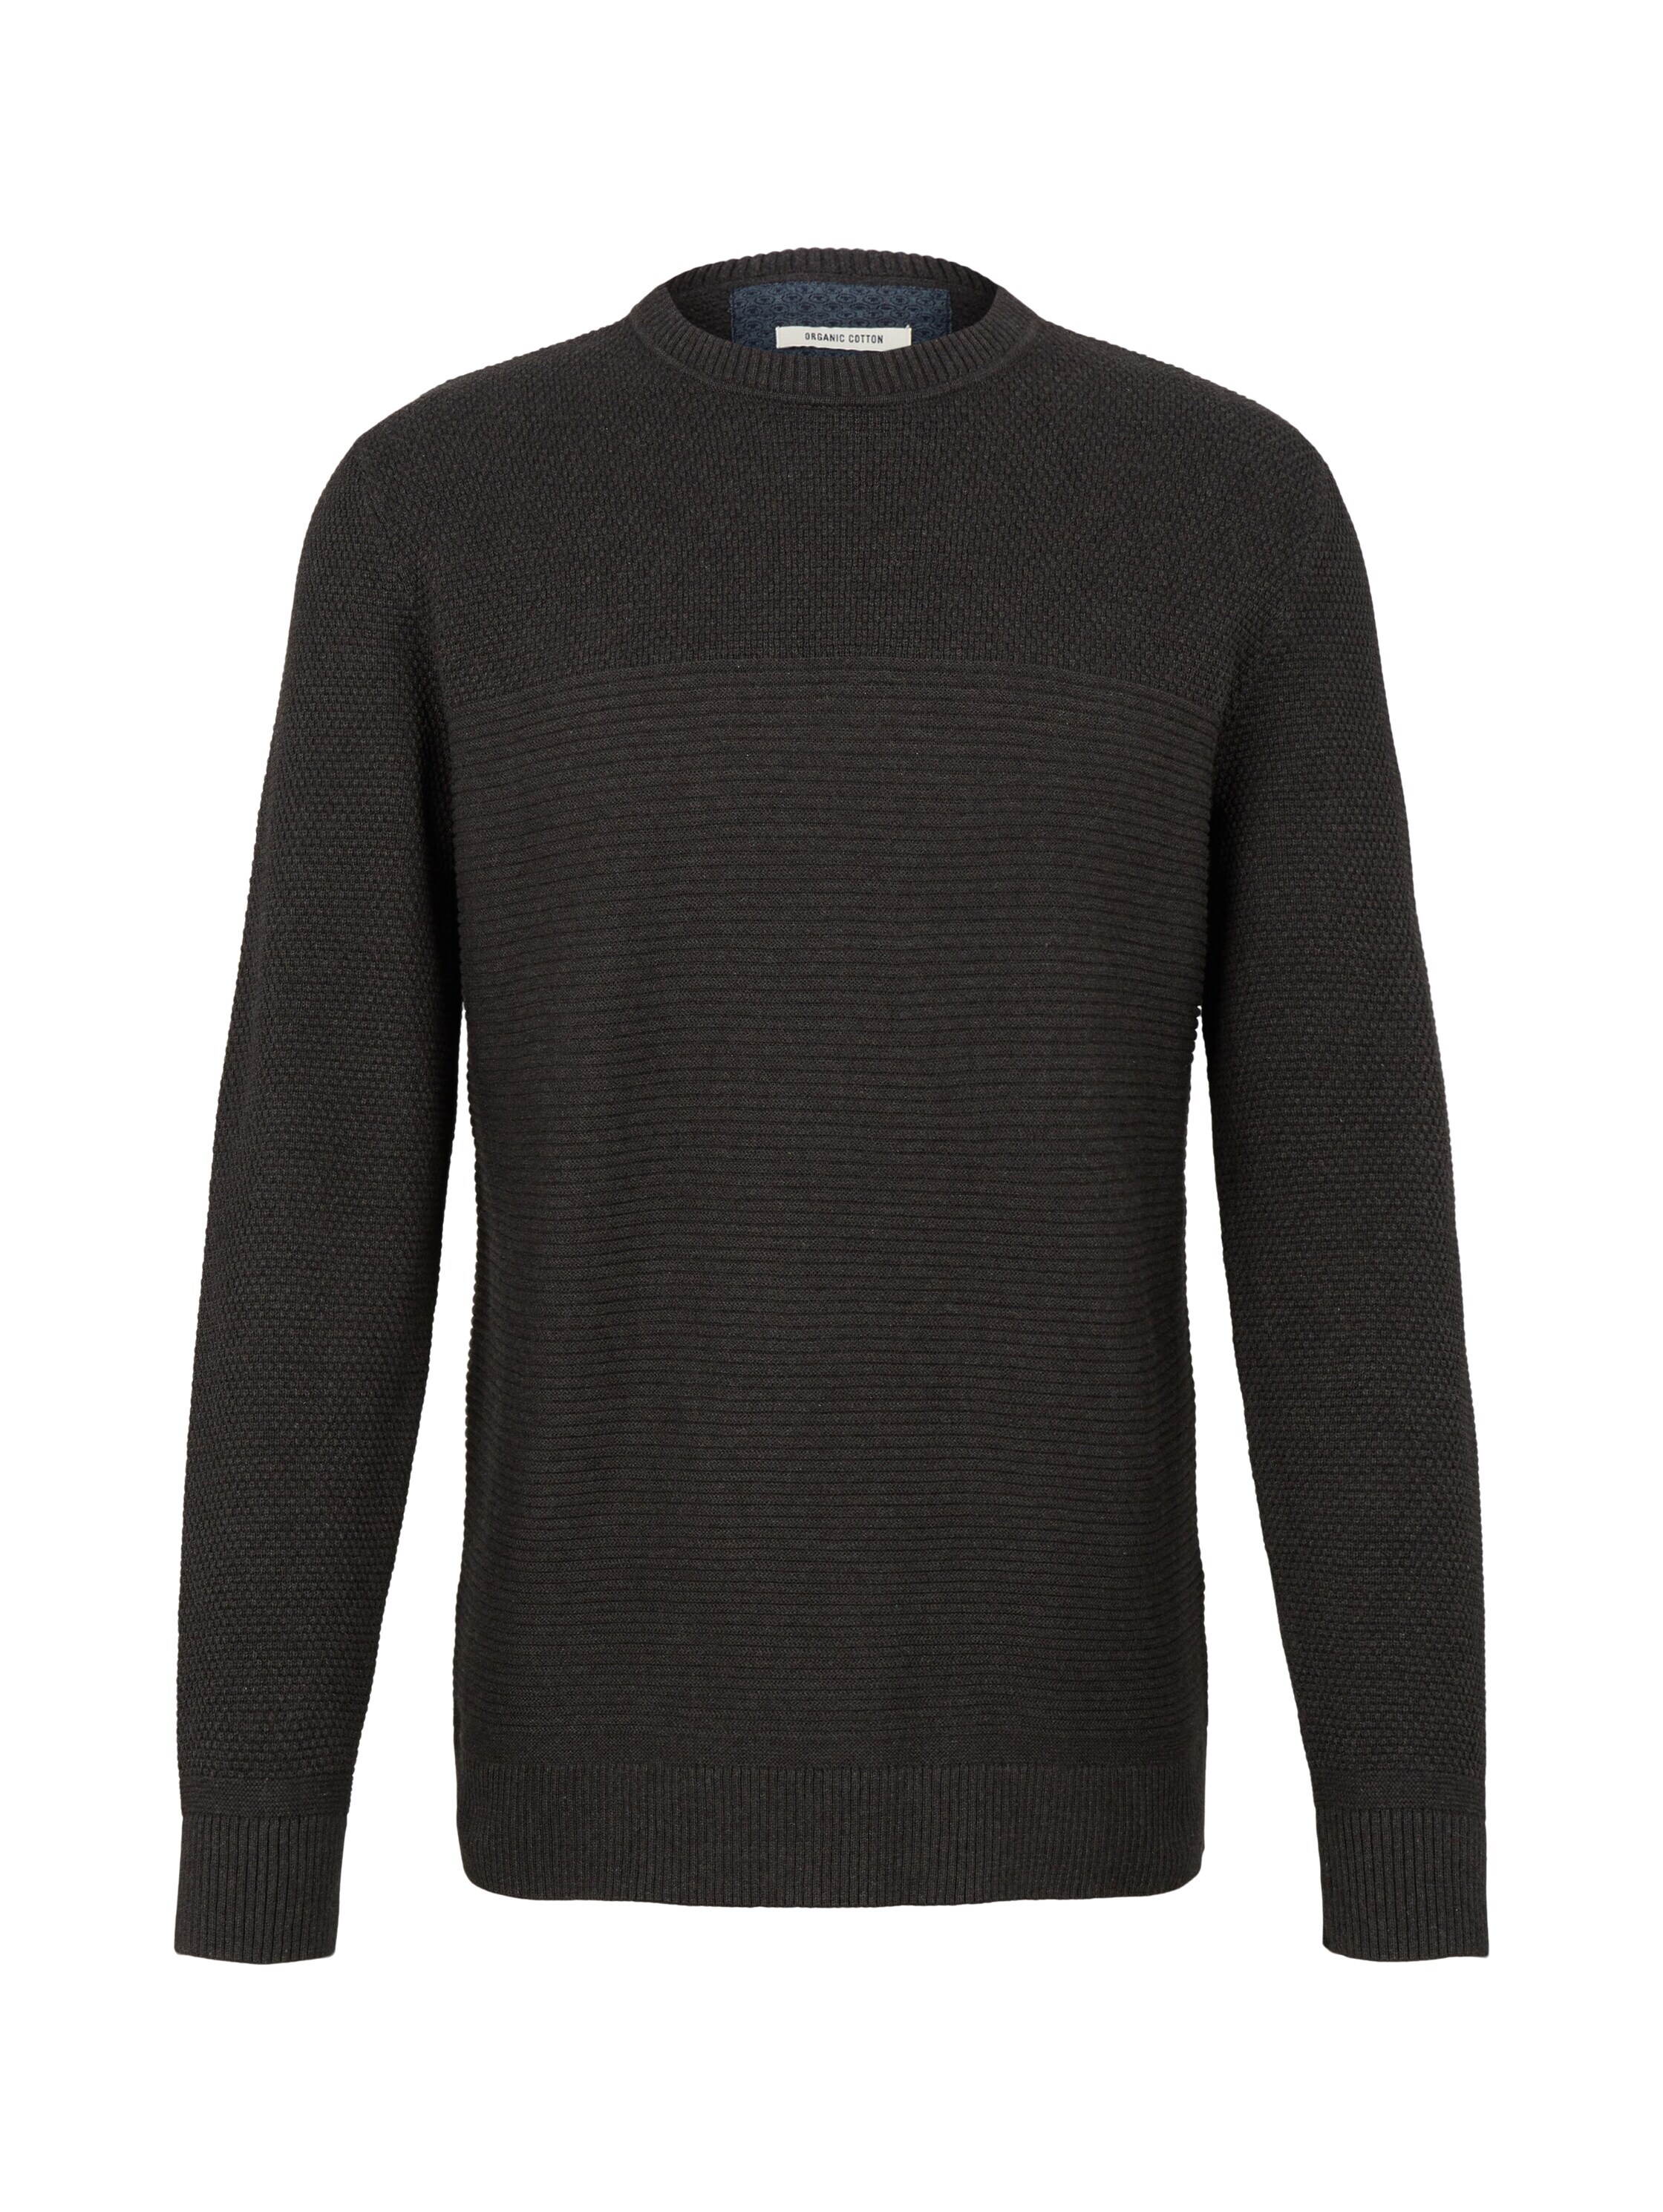 Пуловер Tom Tailor, серый пуловер tom tailor размер s серый